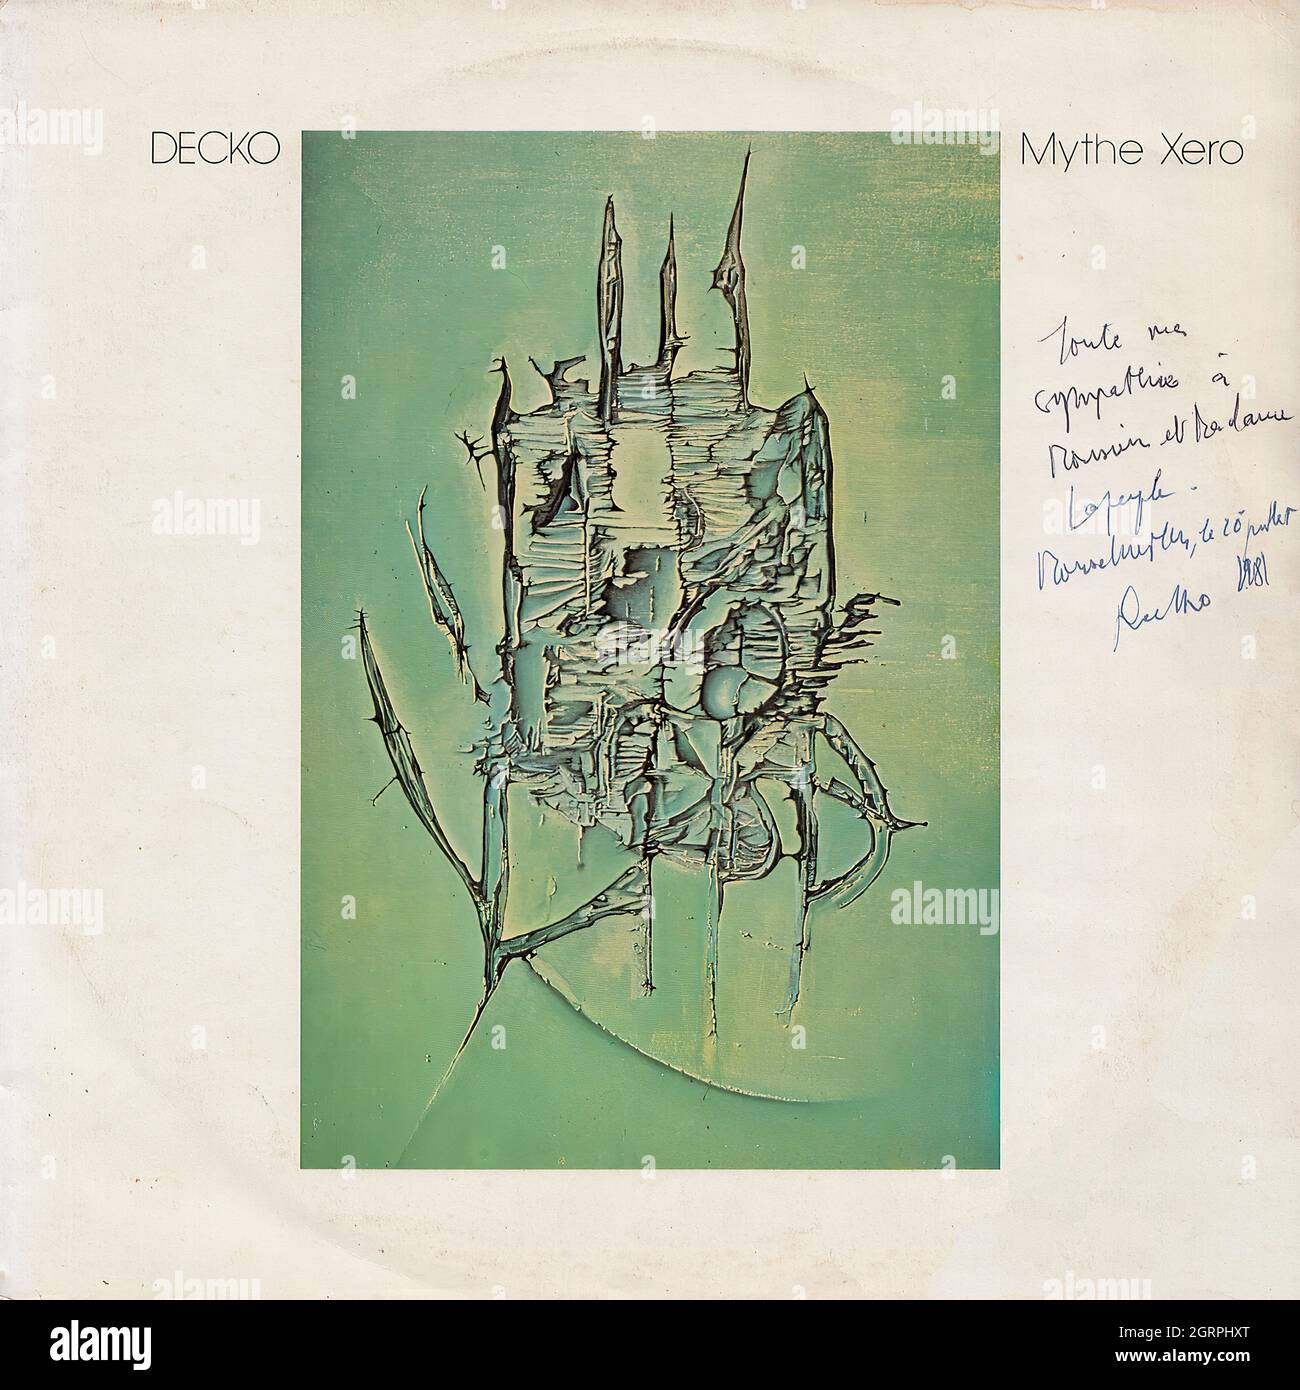 Decko - Mythe Xero - Vintage Vinyl Record Cover Stock Photo